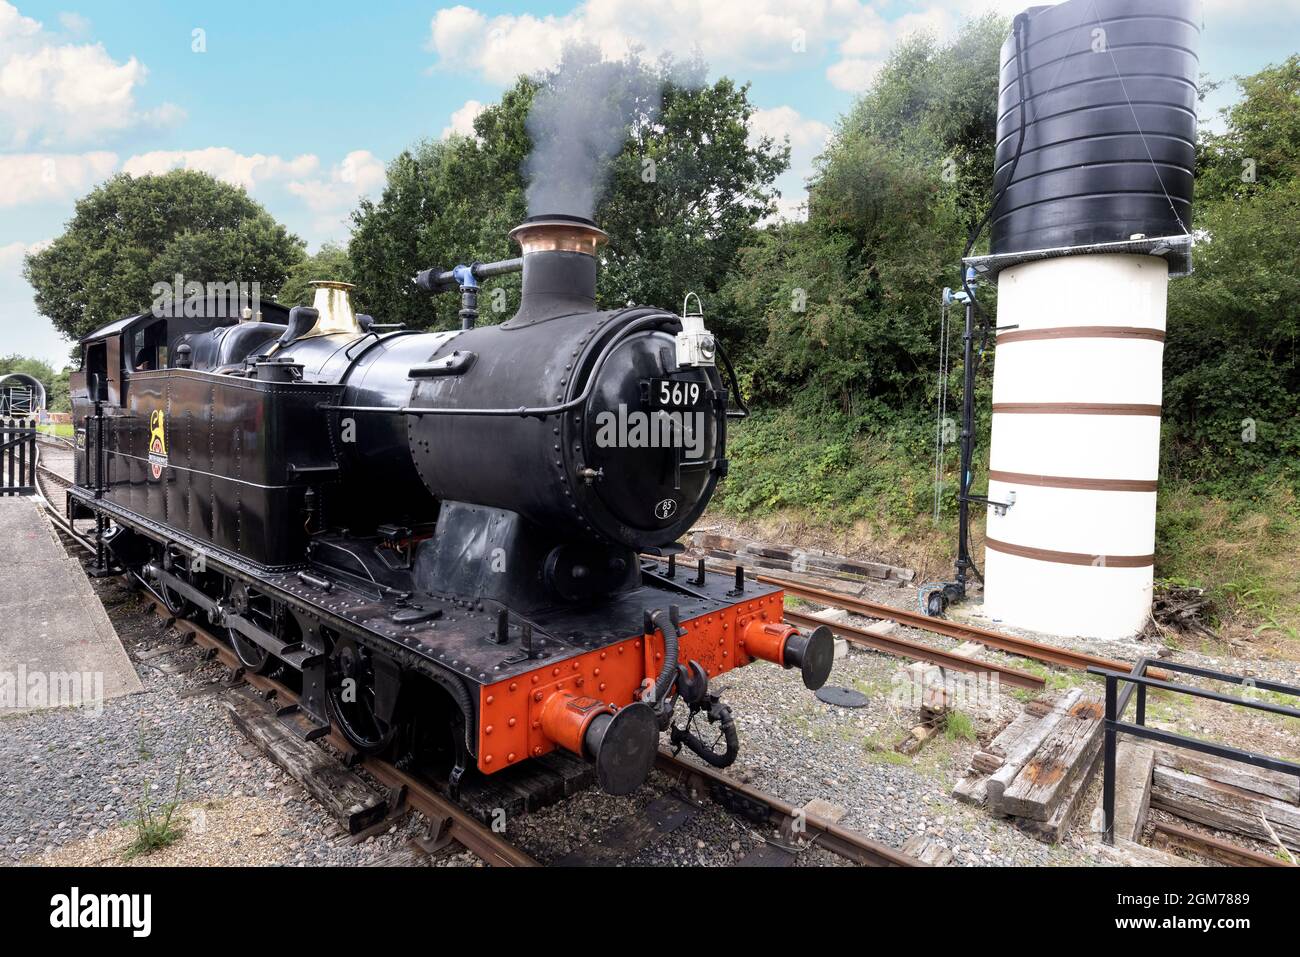 Vintage locomotiva a vapore che si avvicina a una torre d'acqua, Epping Ongar Railway, una ferrovia storica, Epping Essex UK Foto Stock